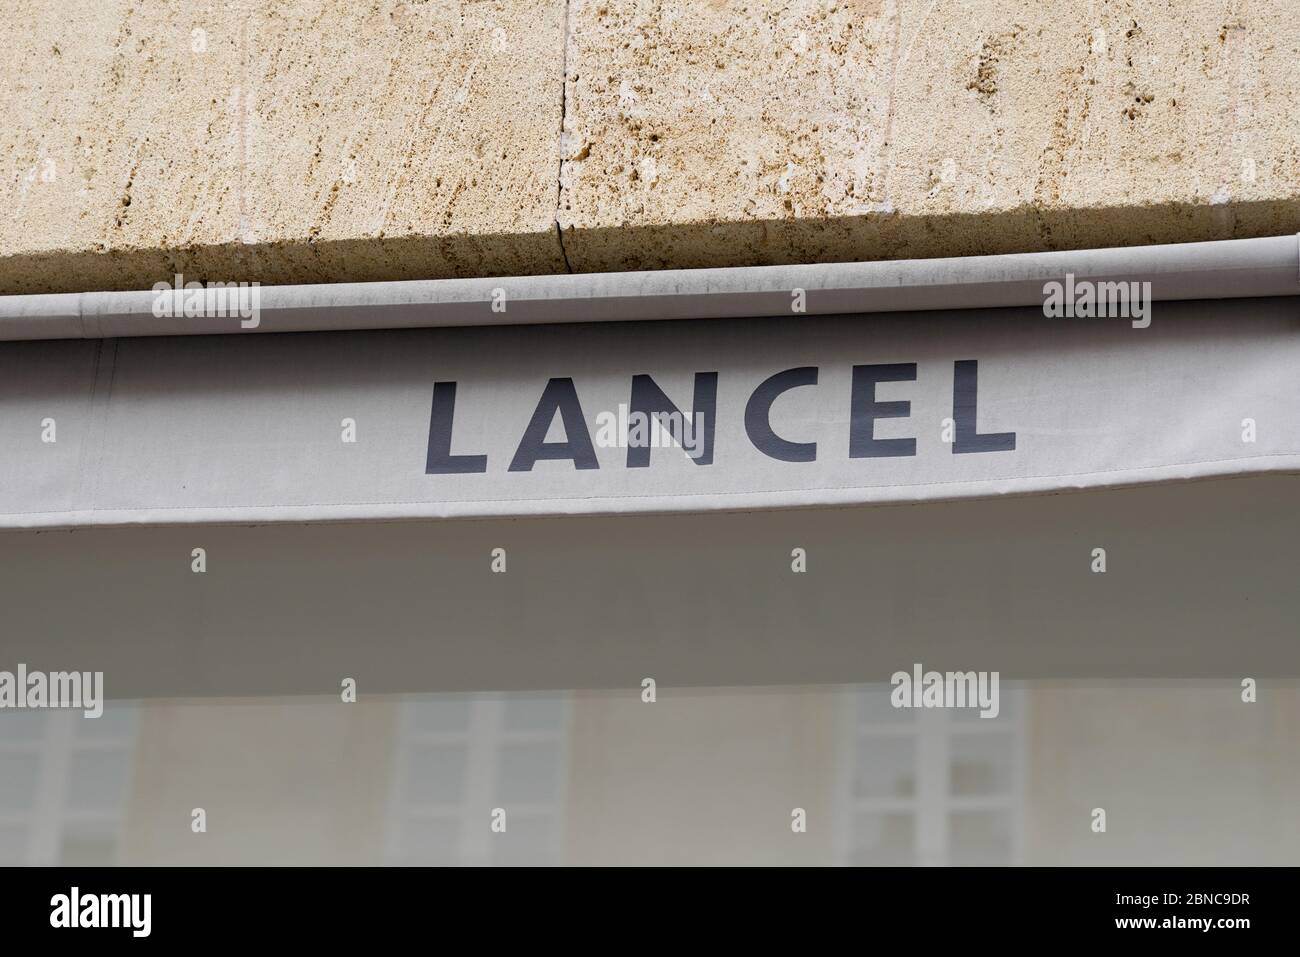 Bordeaux , Aquitaine / France - 05 12 2020 : Lancel logo store shop sign in street Stock Photo